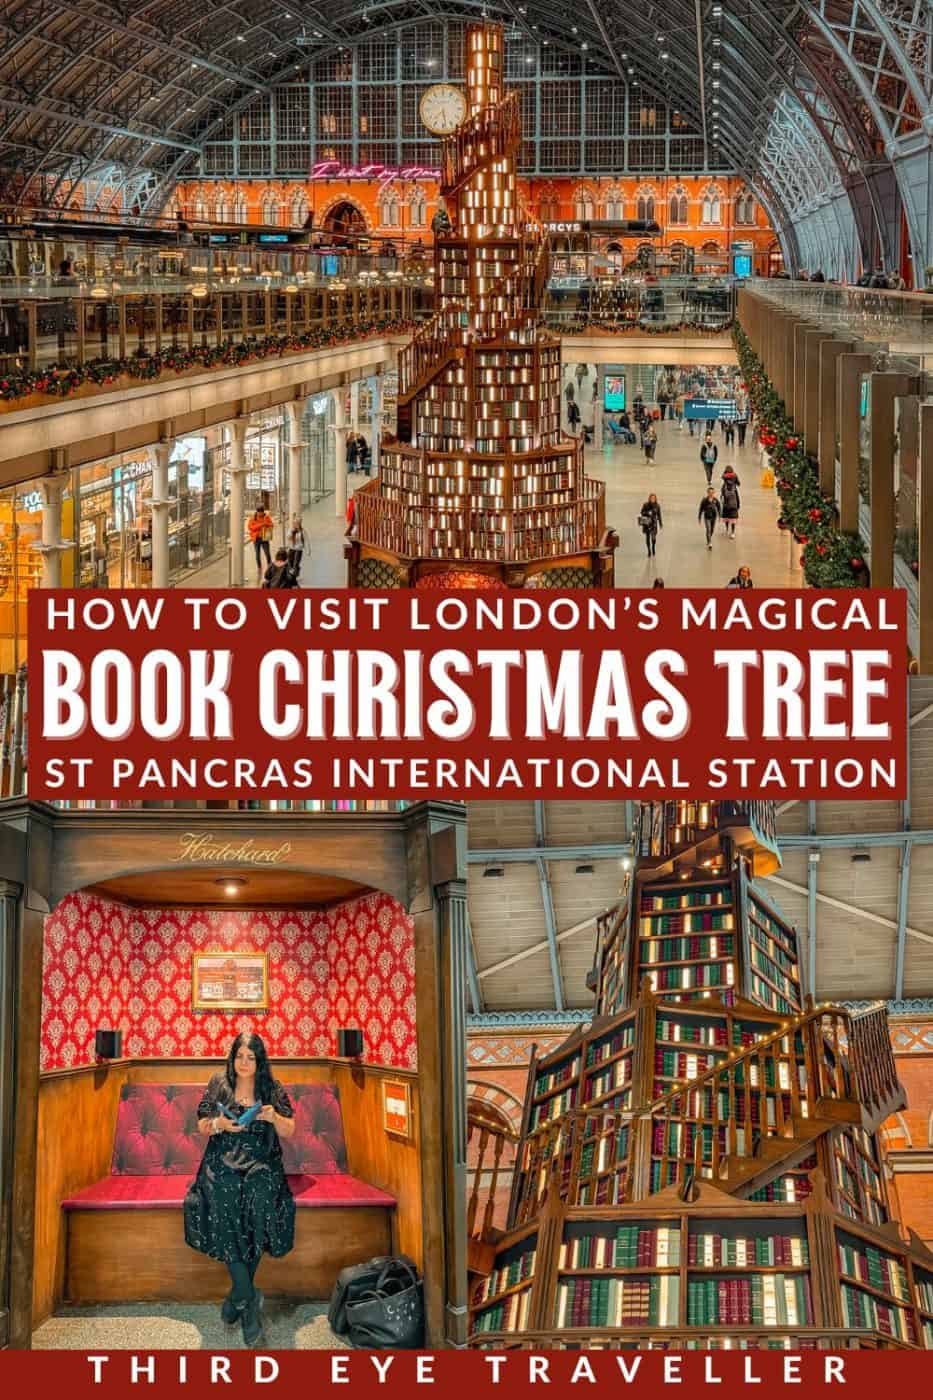 London Book Christmas tree Hatchard's St Pancras